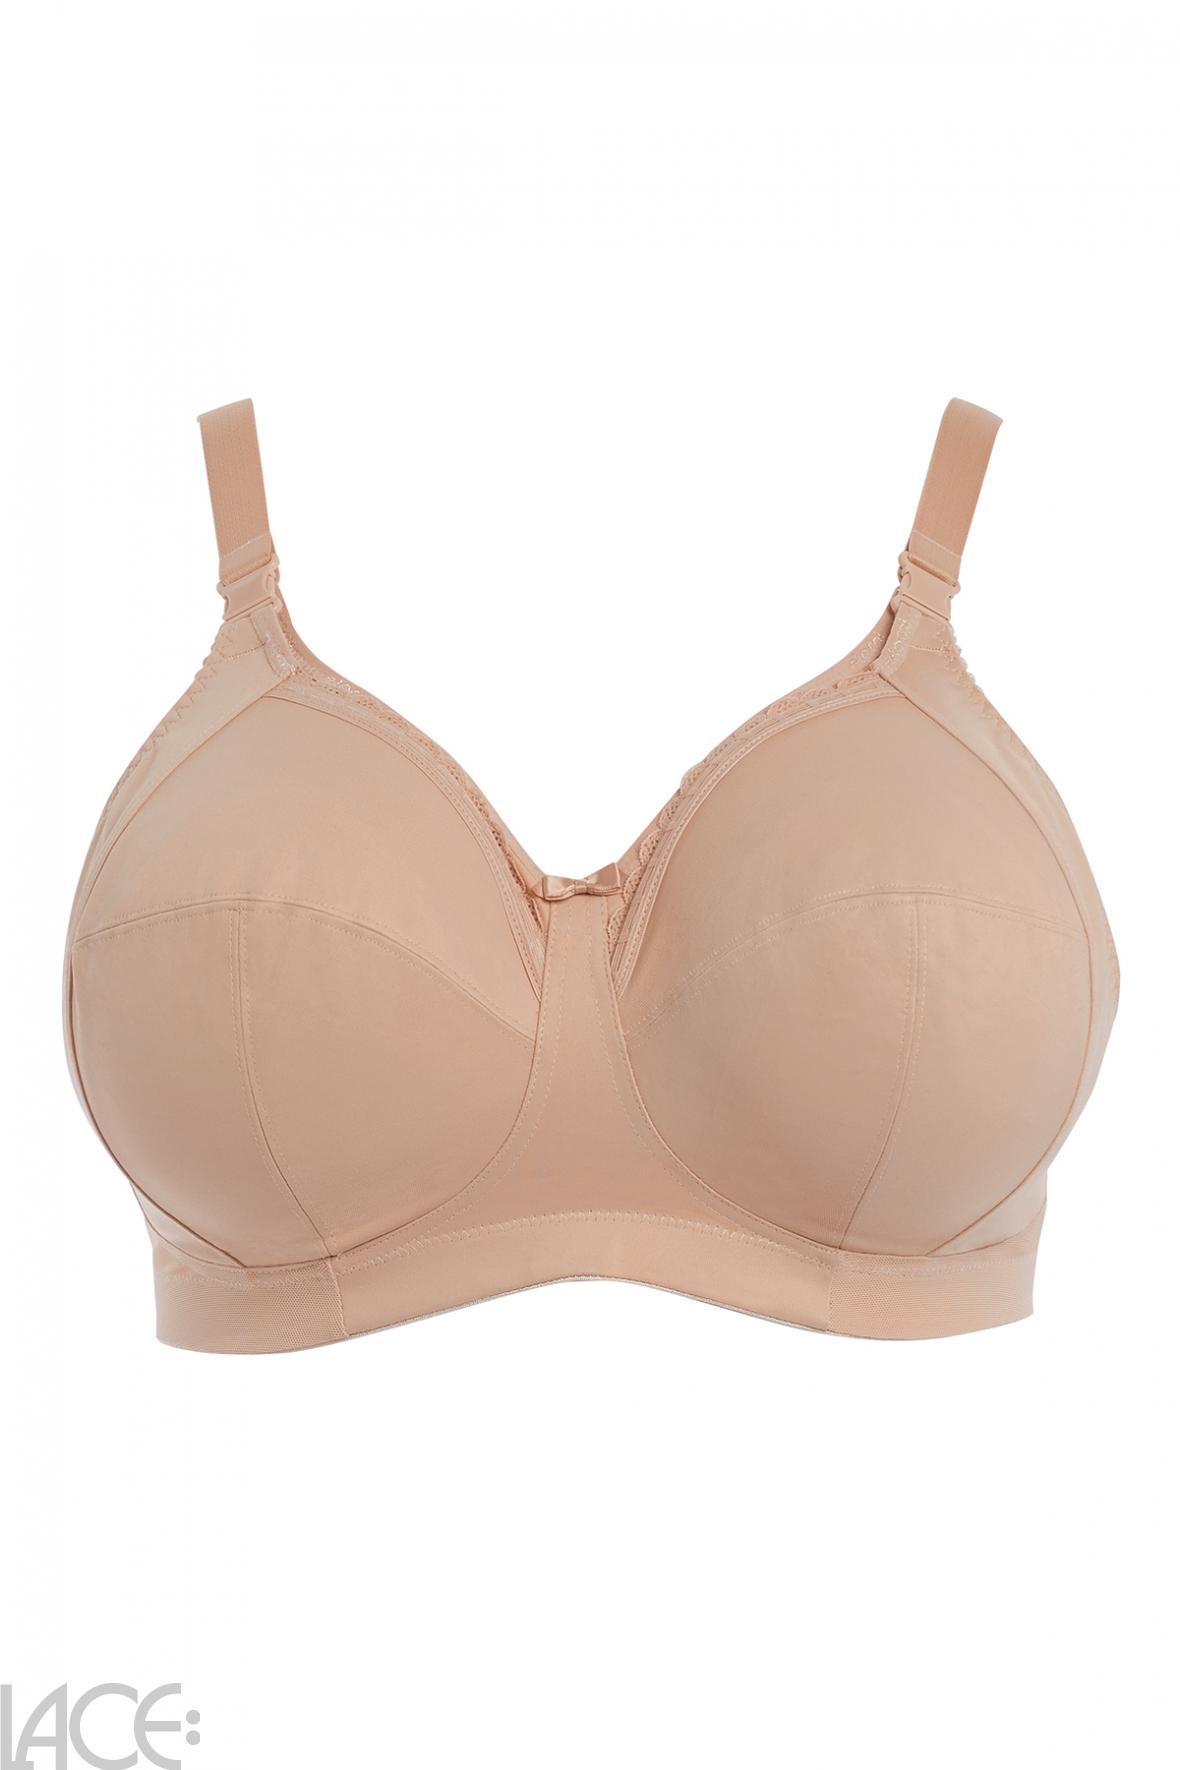 NWT Elomi Beatrice Soft Cup Nursing Bra Nude Size 38E - $43 New